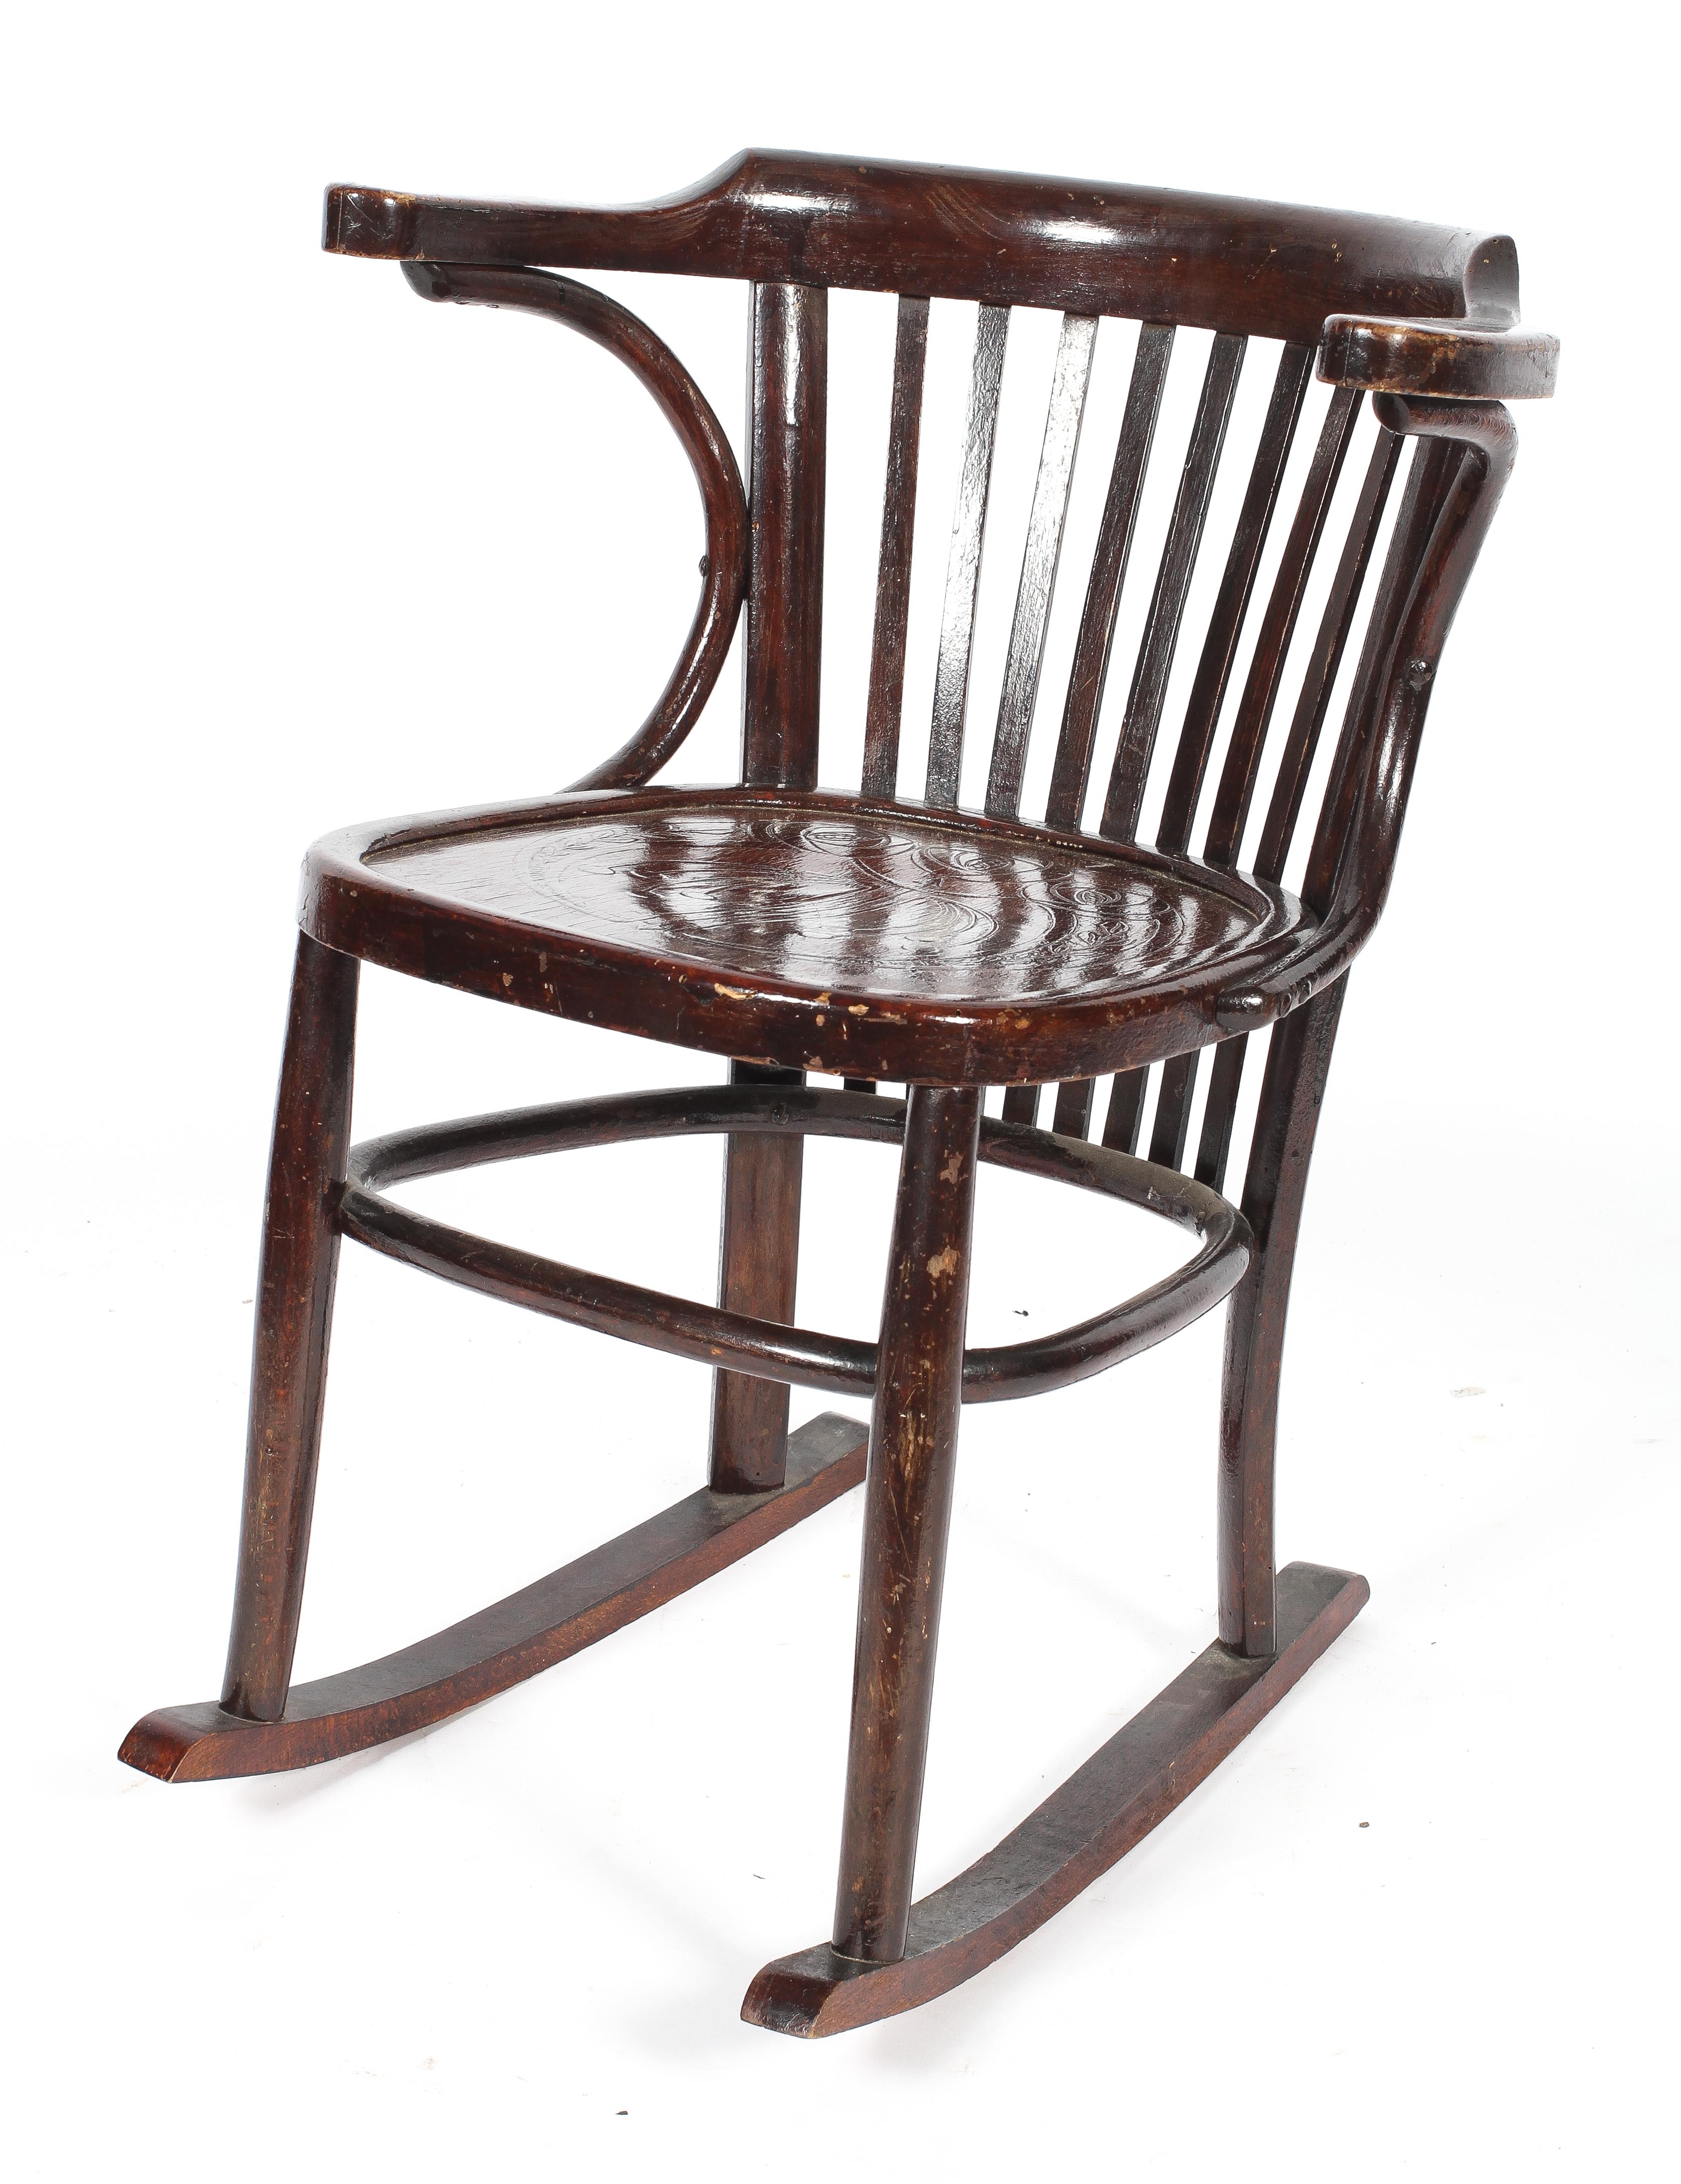 An Art Nouveau style bentwood rocking chair,